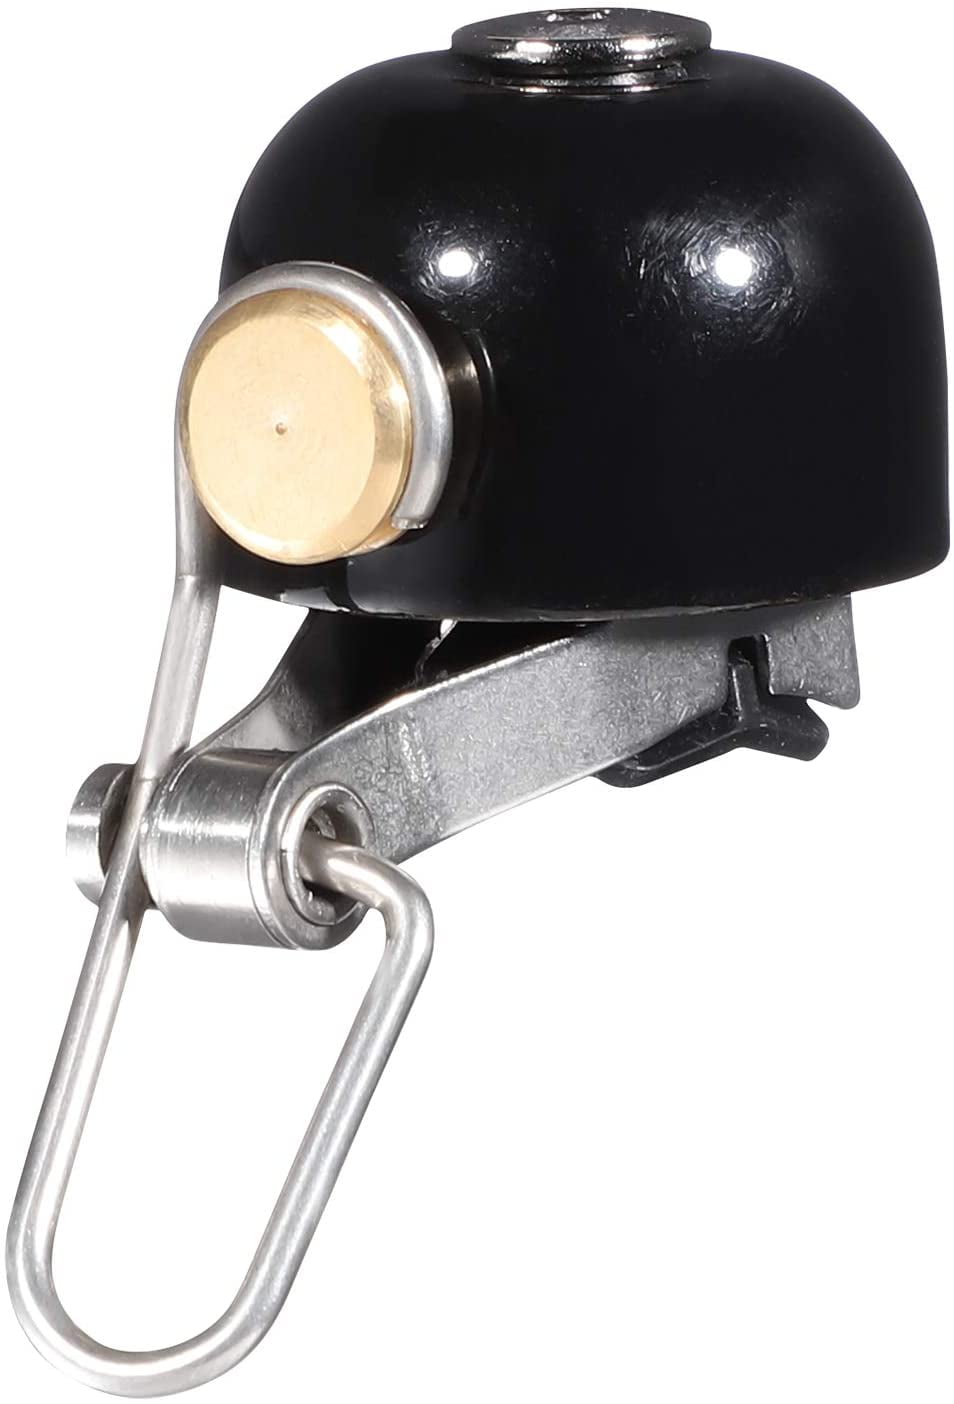 Bike Bicycle Cycling Handlebar Bell Safety Metal Ring Loud Sound Handlebar Bells Ultra-loud MTB Road Bikes Horns CS193 Black